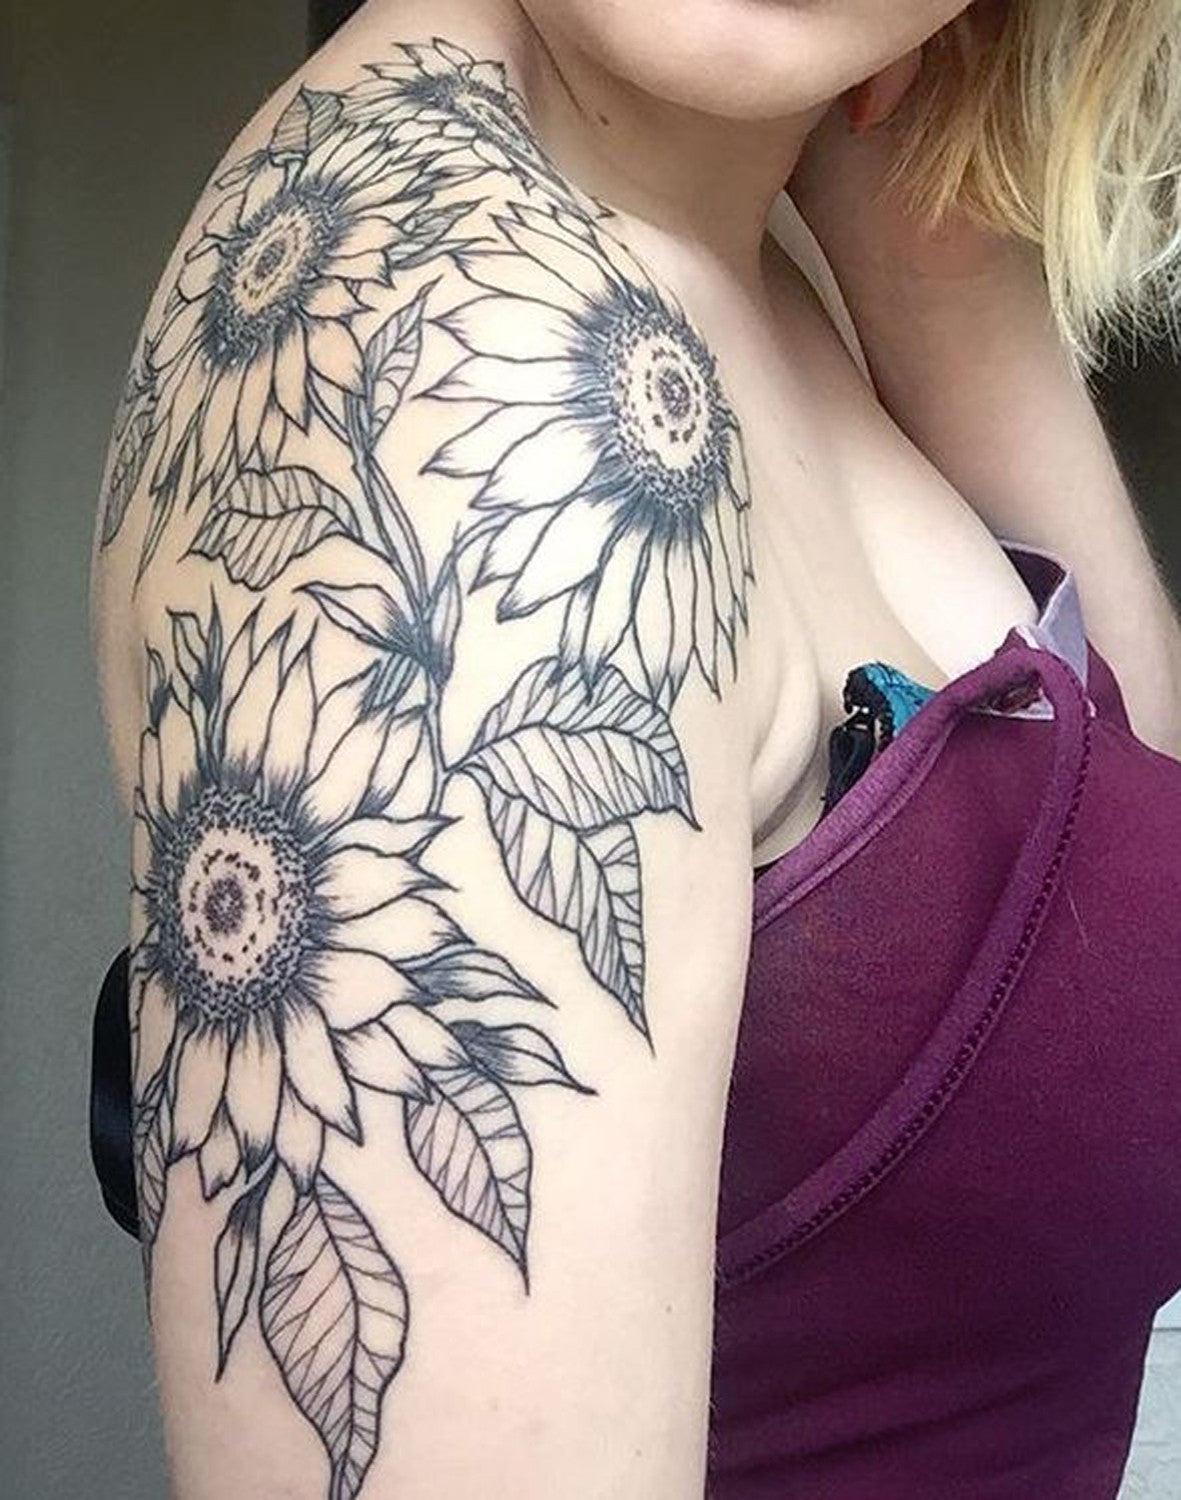 Full Arm Sleeve Sunflower Floral Tattoo Ideas On Shoulder for Women at MyBodiArt.com